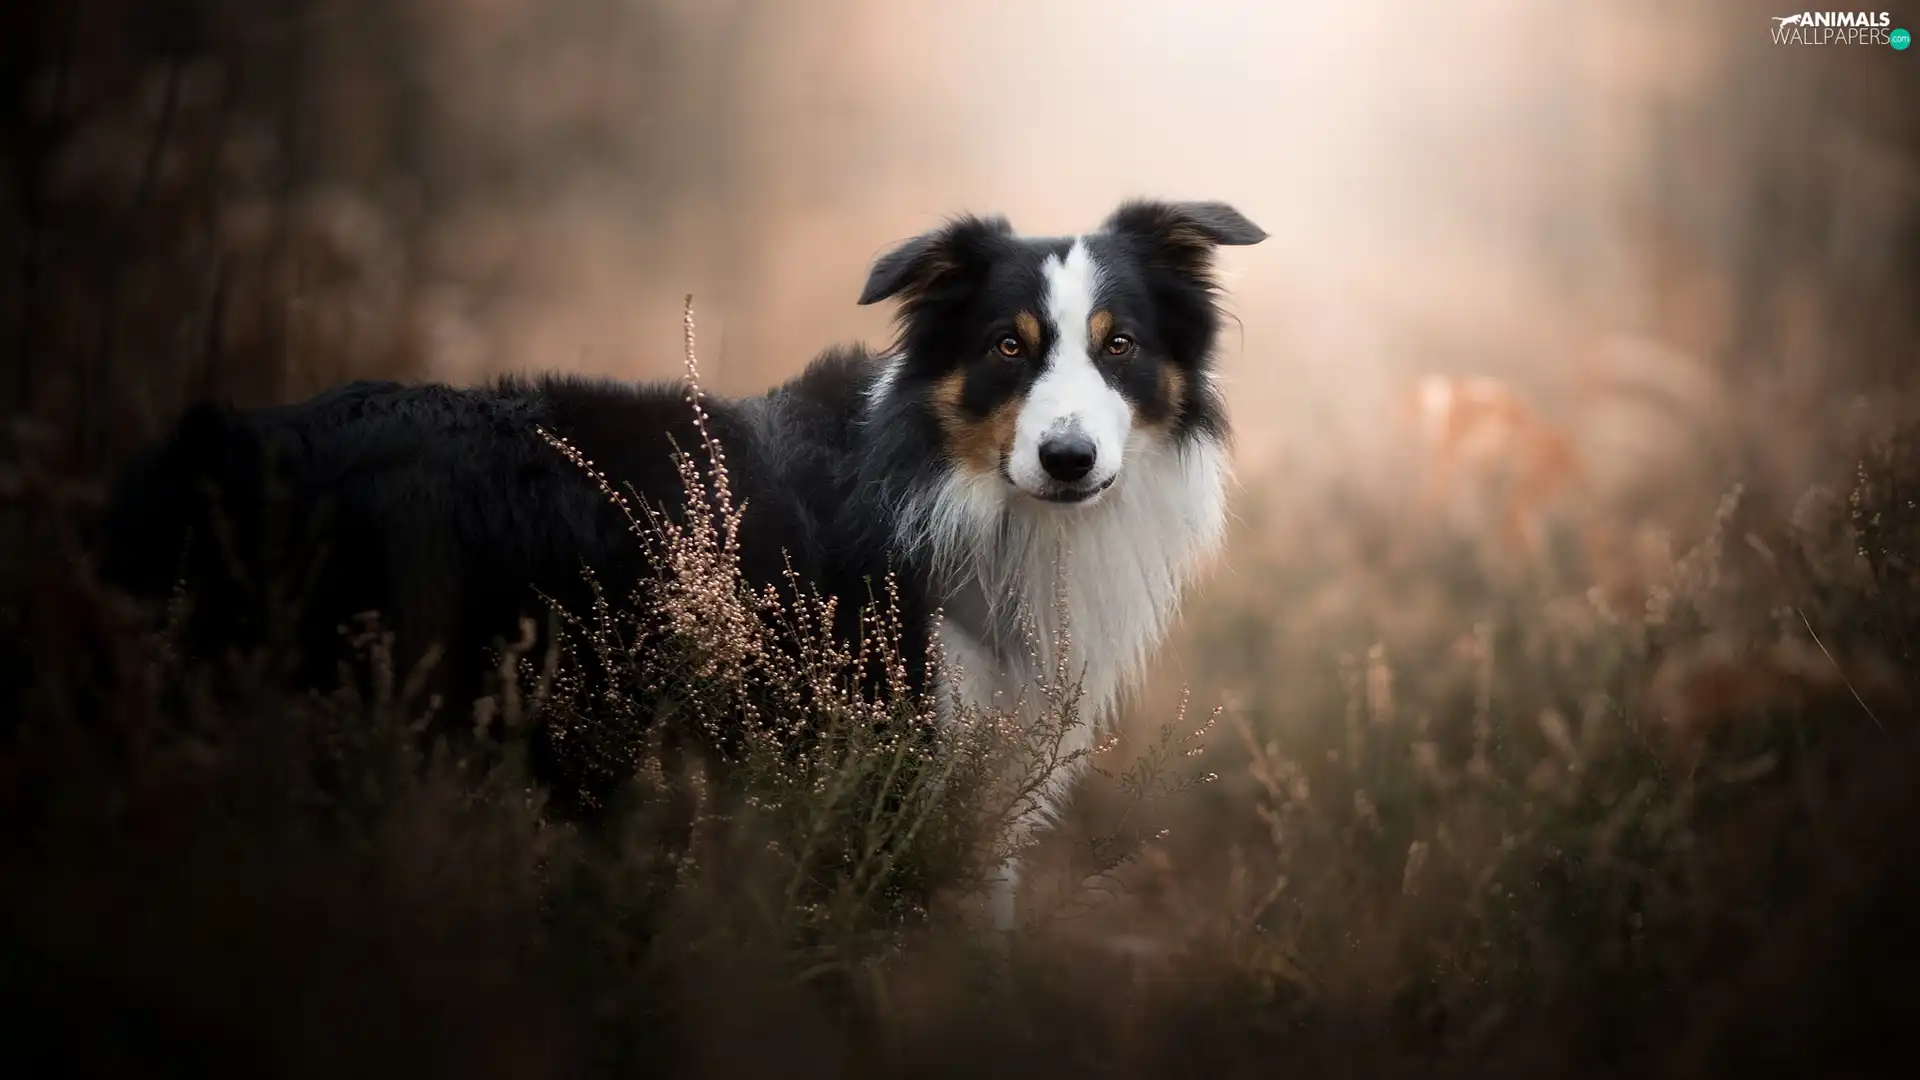 fuzzy, background, Border Collie, heathers, dog